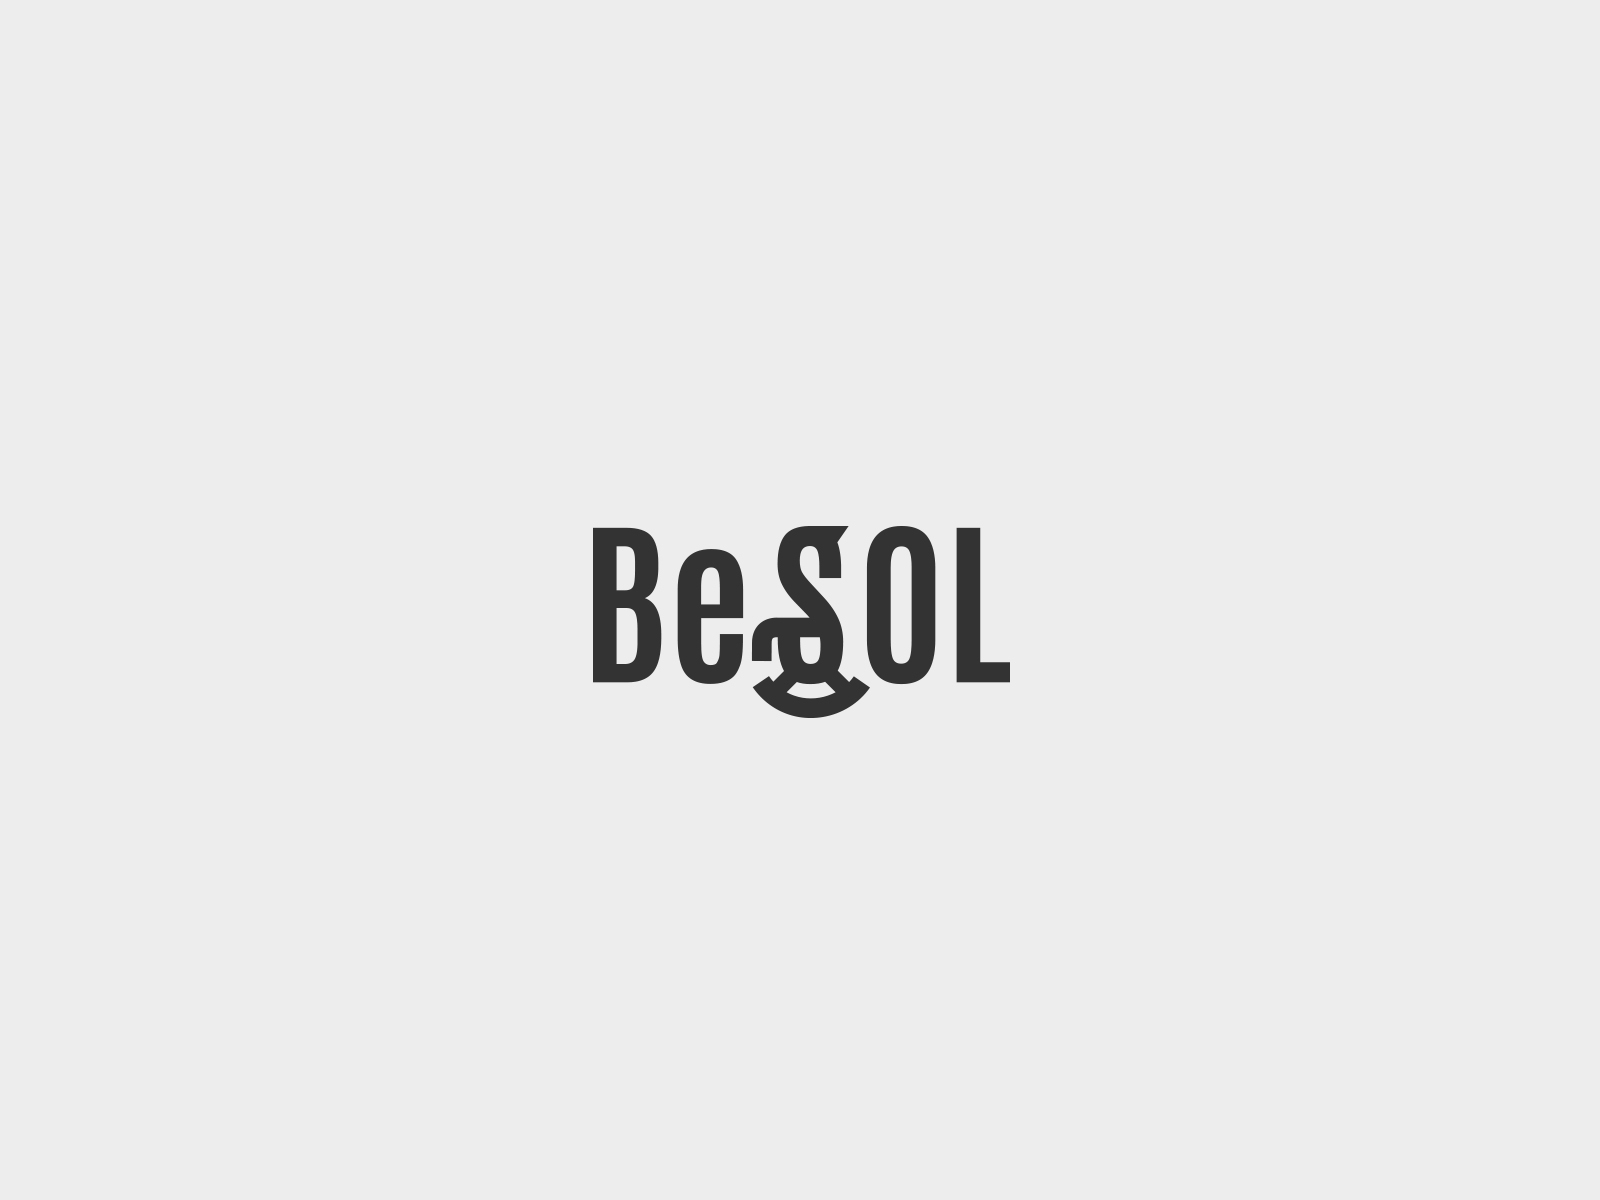 BeSol - logotype by Patryk Kratiuk on Dribbble